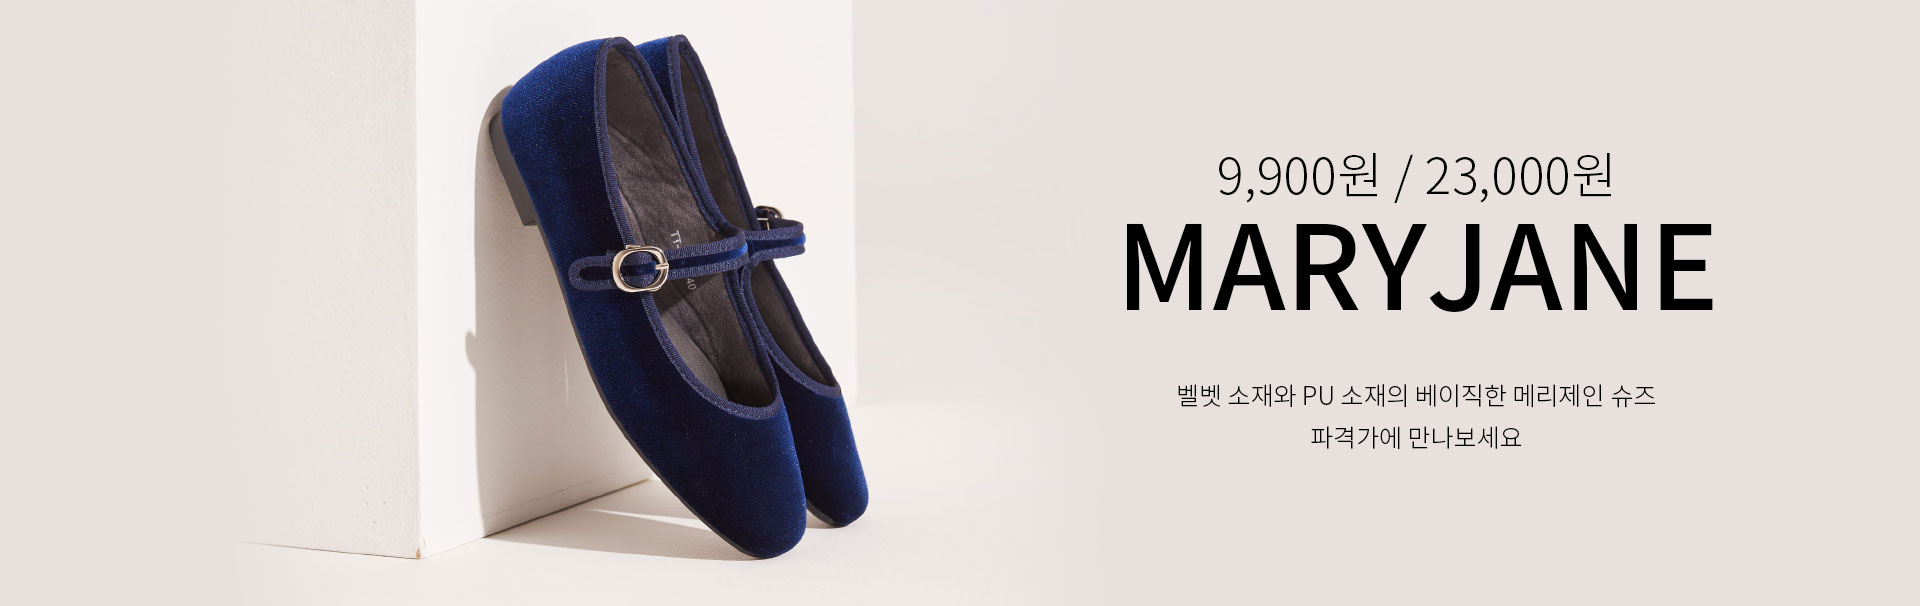 Maryjane Flat Shoes SALE!